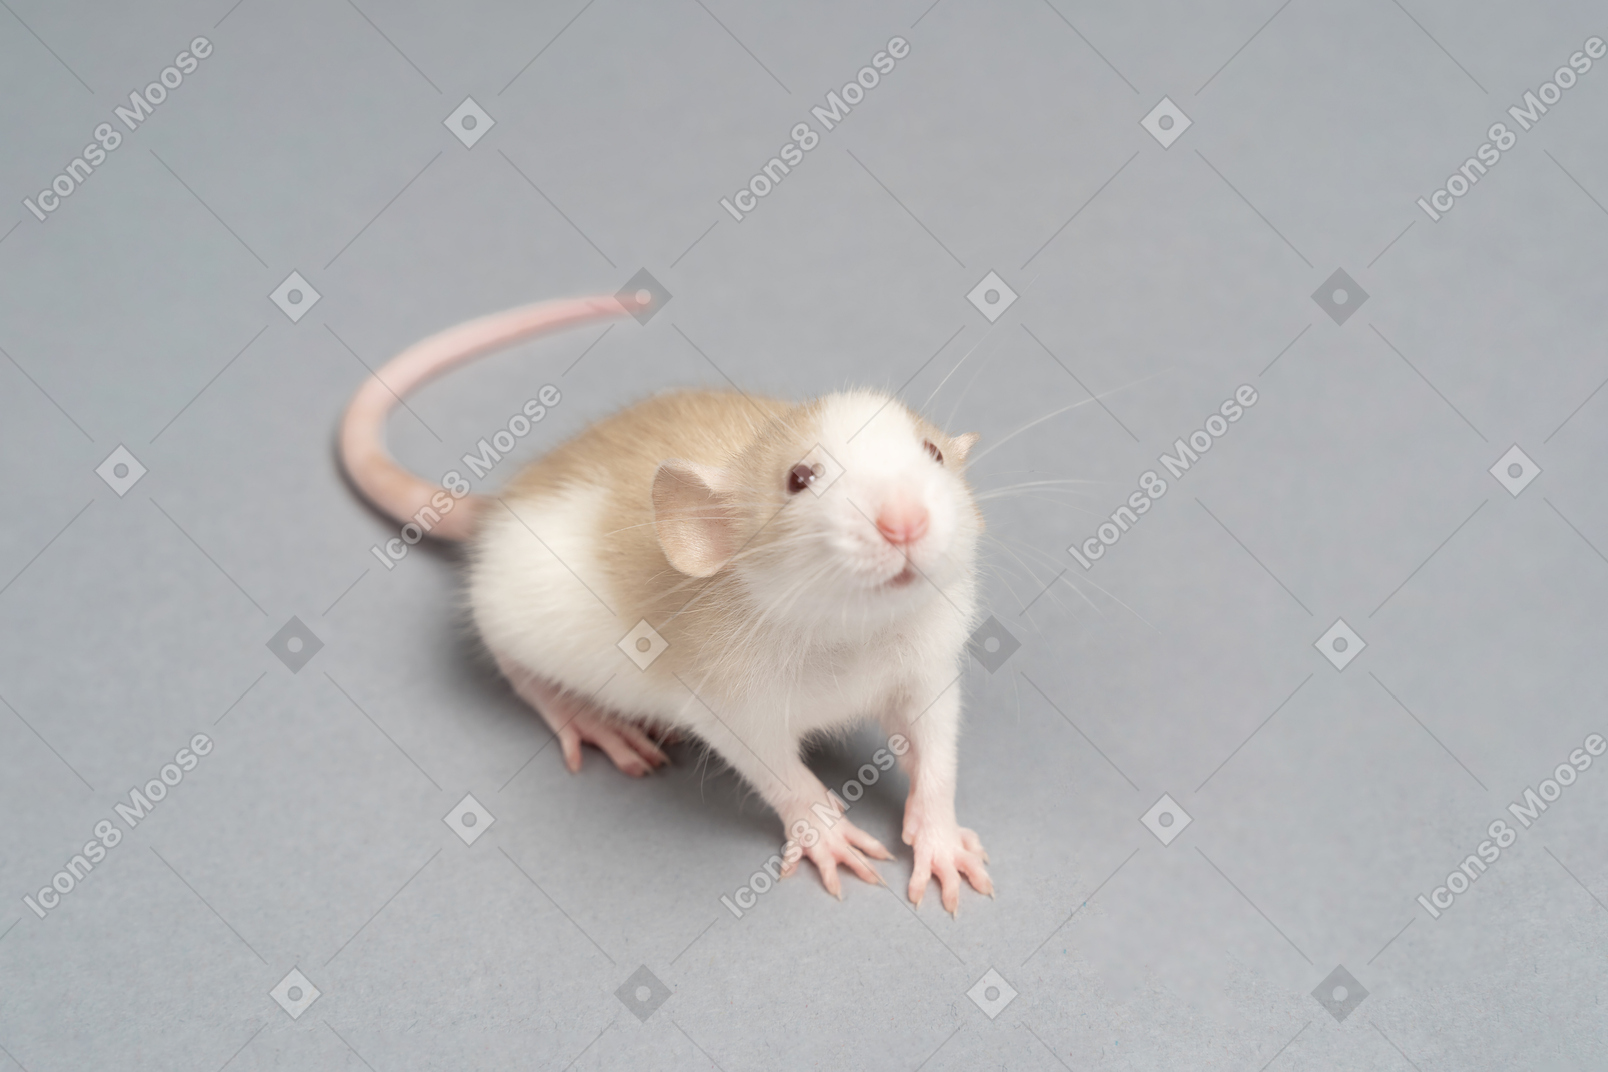 Um curioso rato branco e cinza